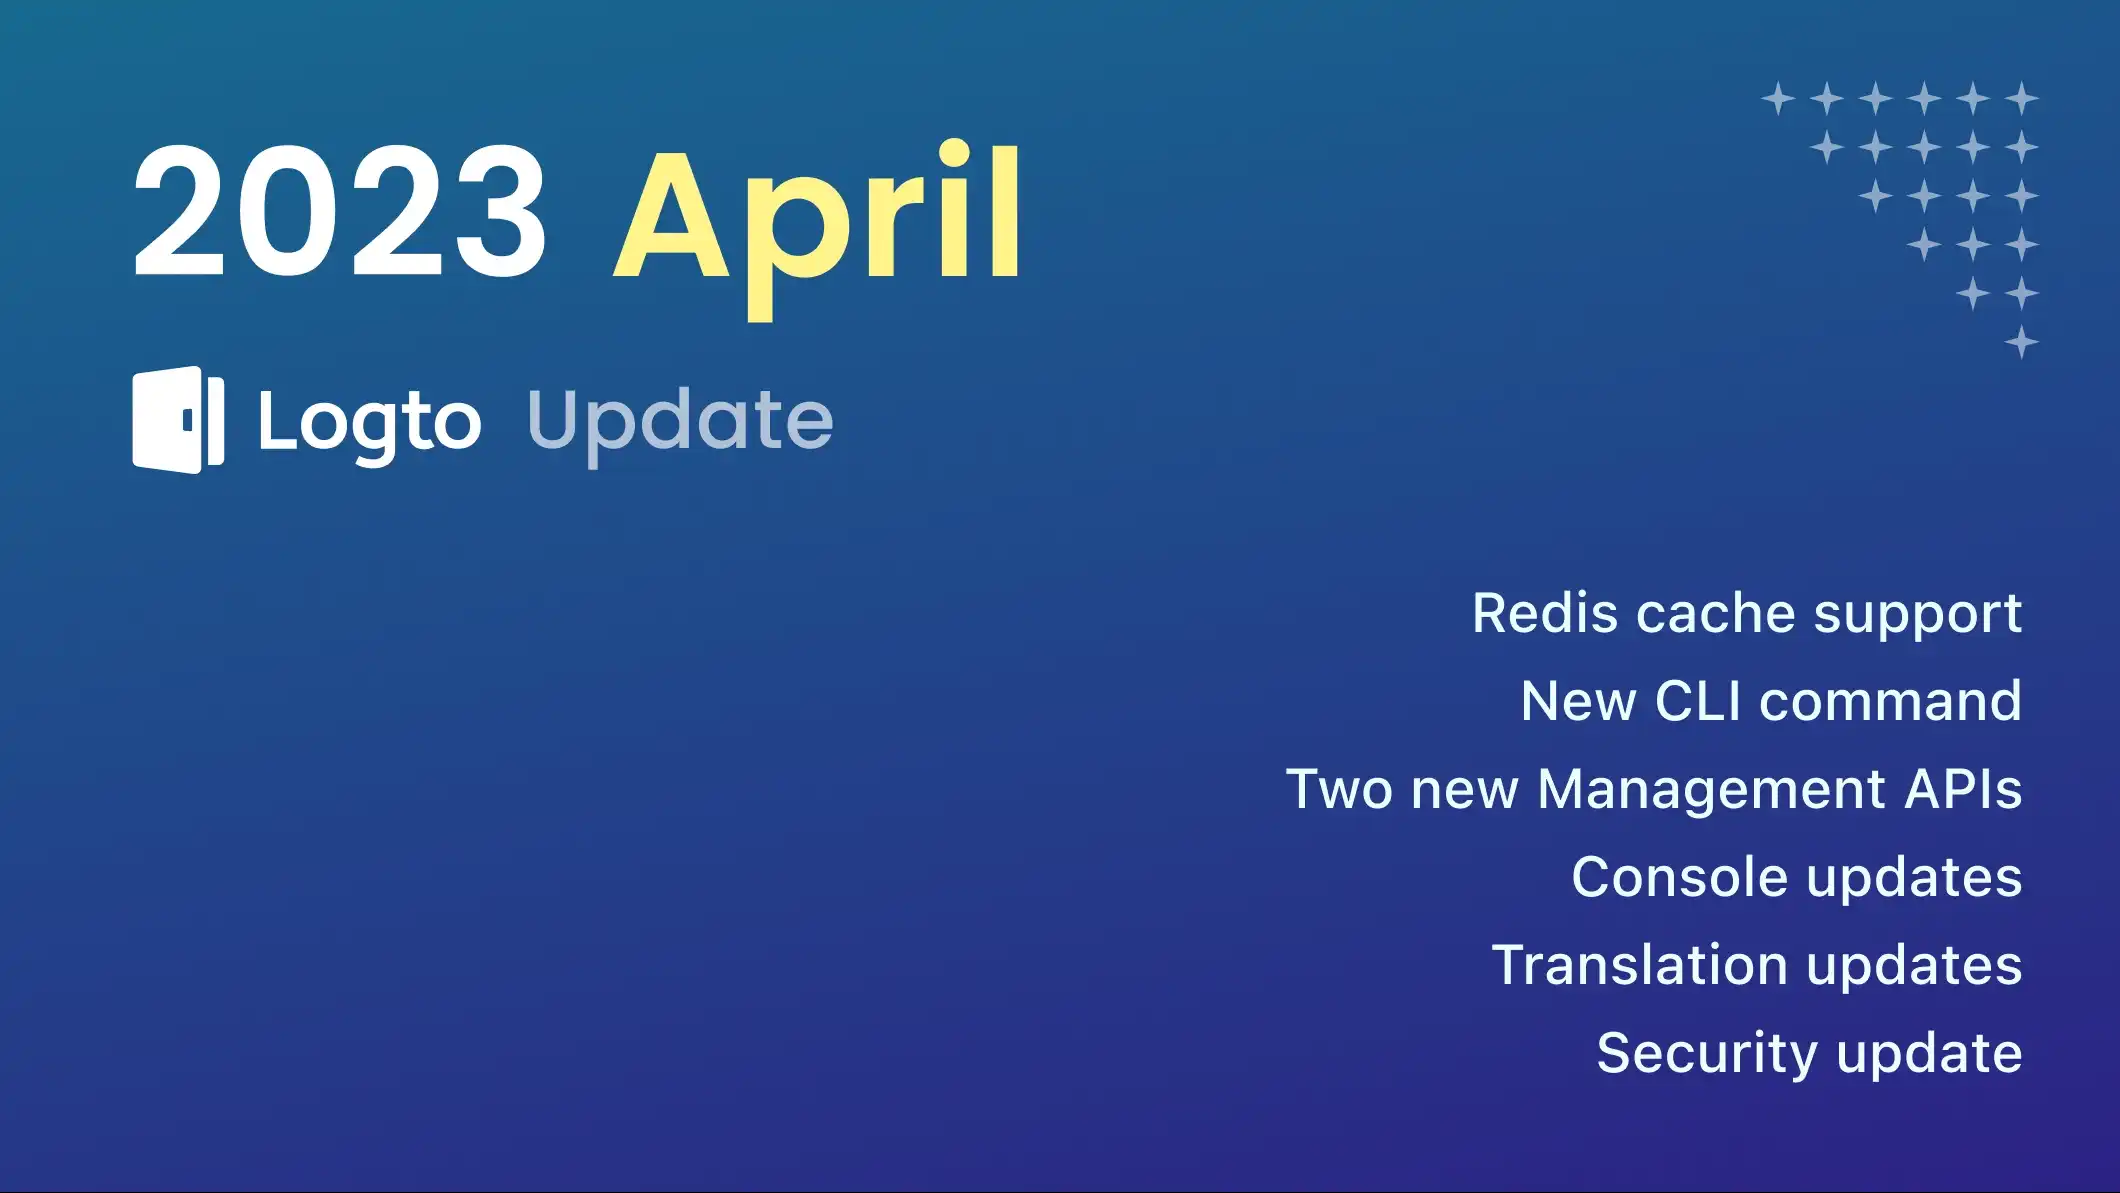 Logto 2023 April update